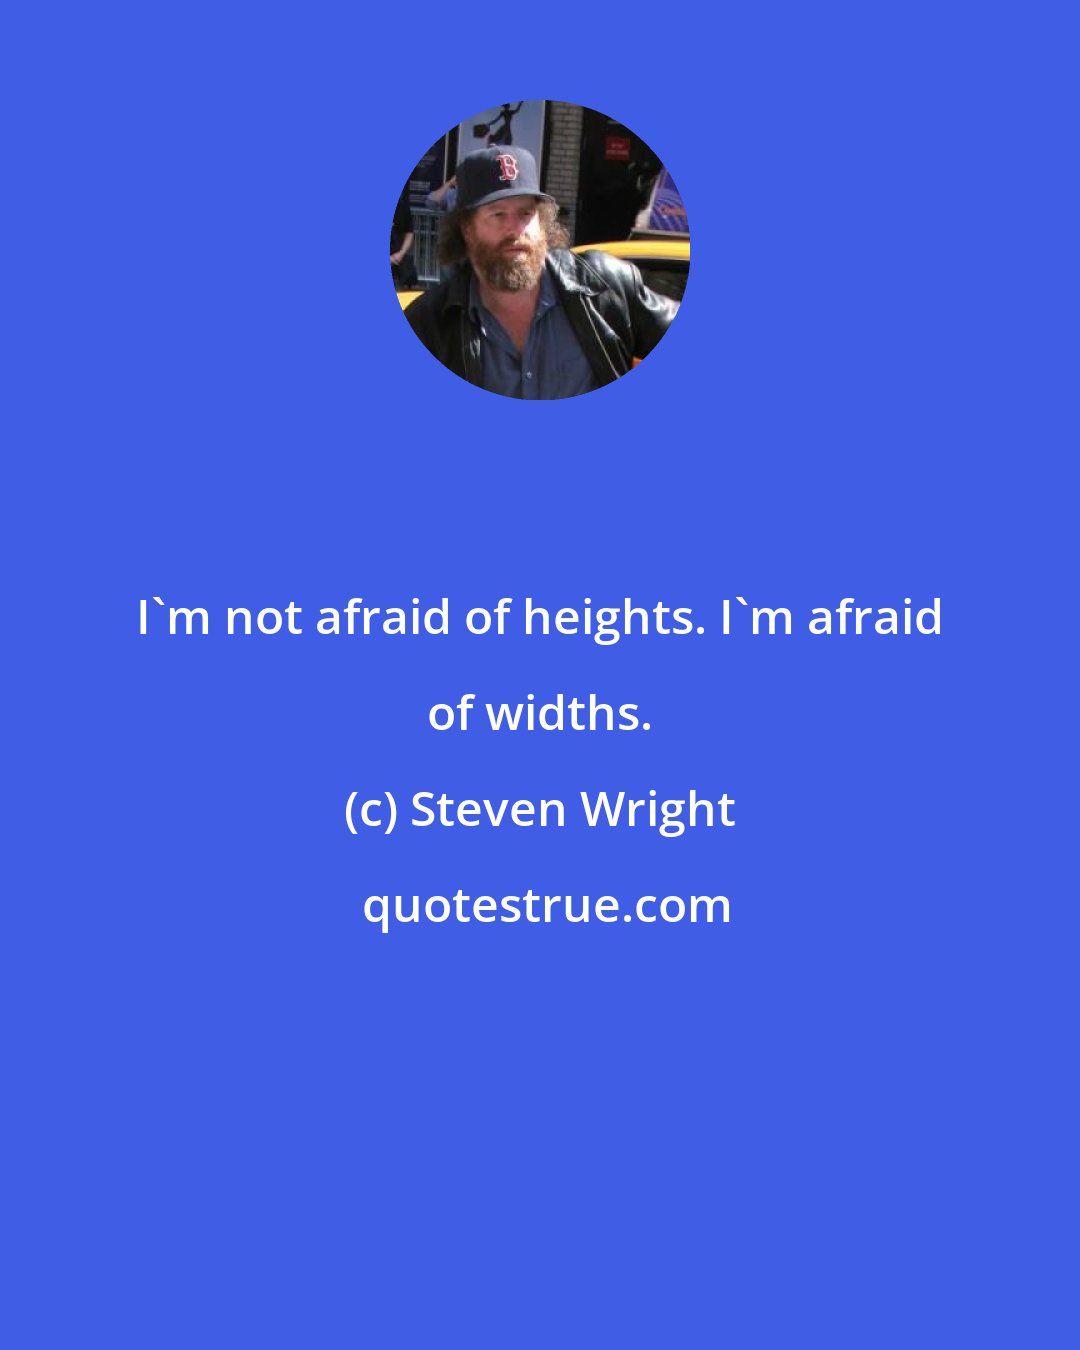 Steven Wright: I'm not afraid of heights. I'm afraid of widths.